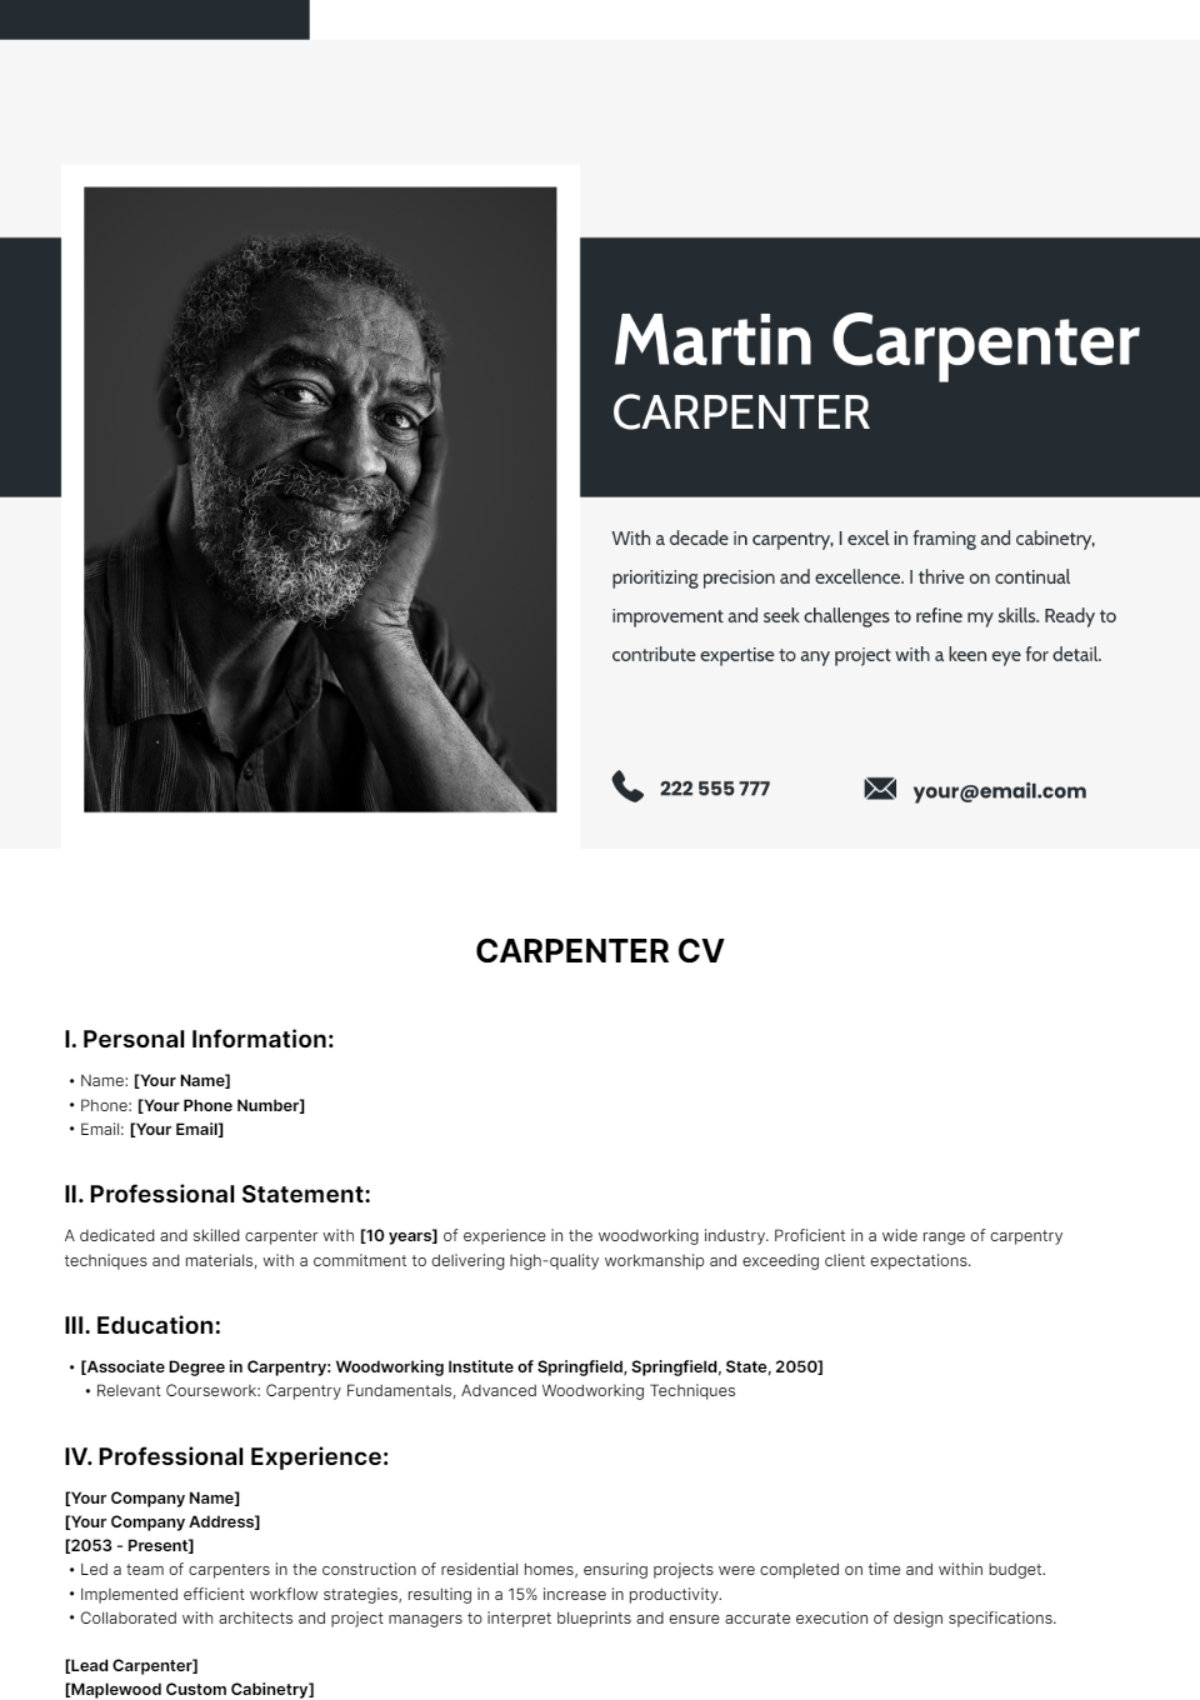 Carpenter CV Template